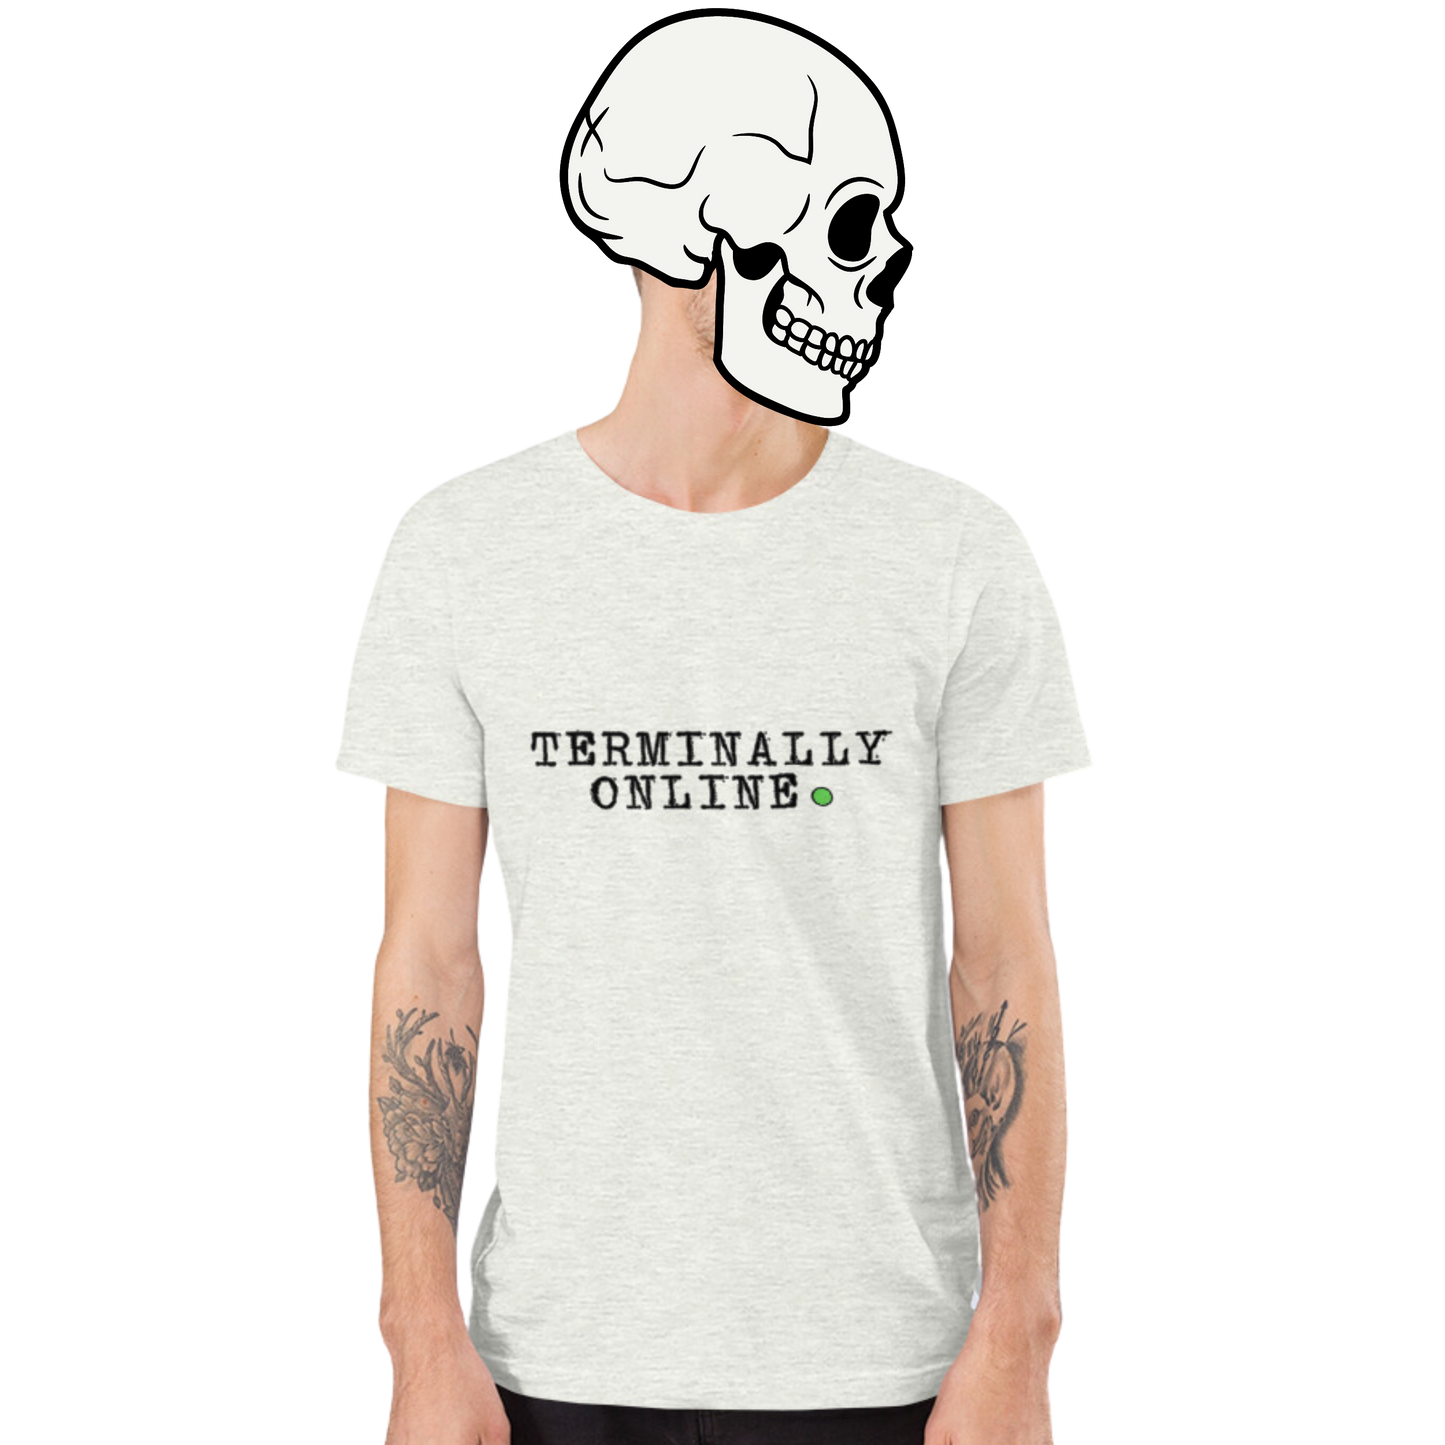 terminally online t-shirt model in white - gaslit apparel